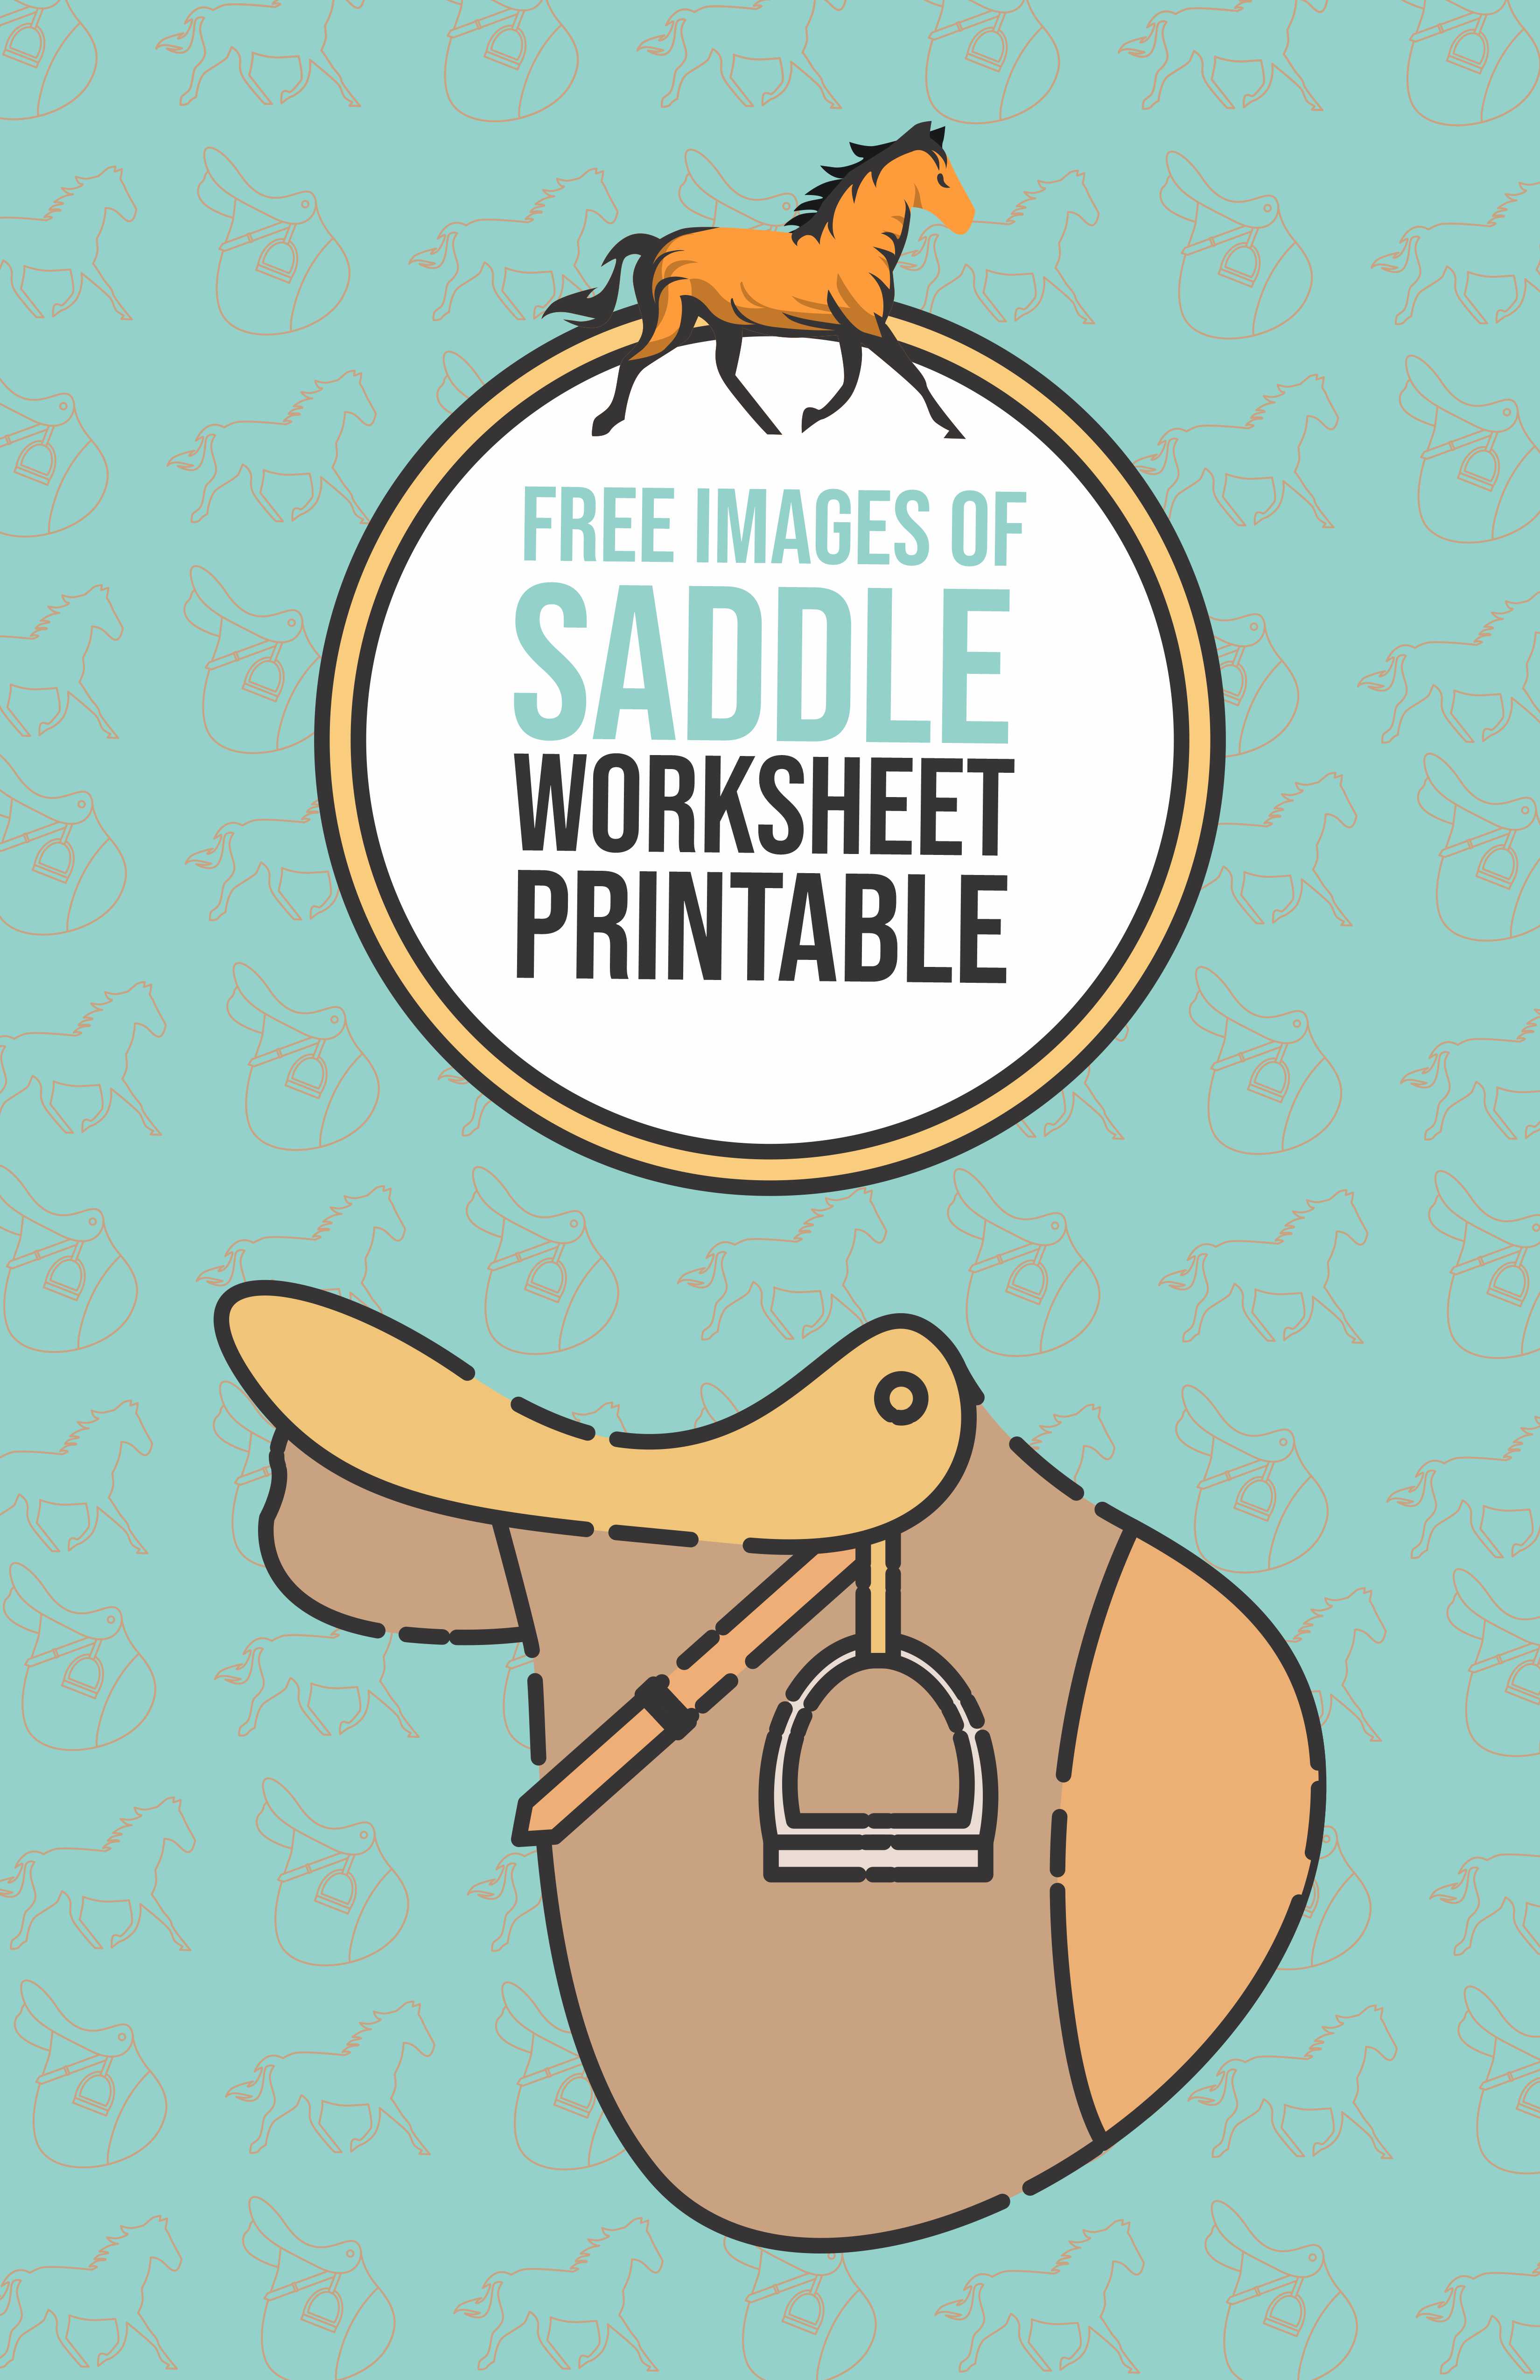 17 Images of Saddle Worksheets Printable